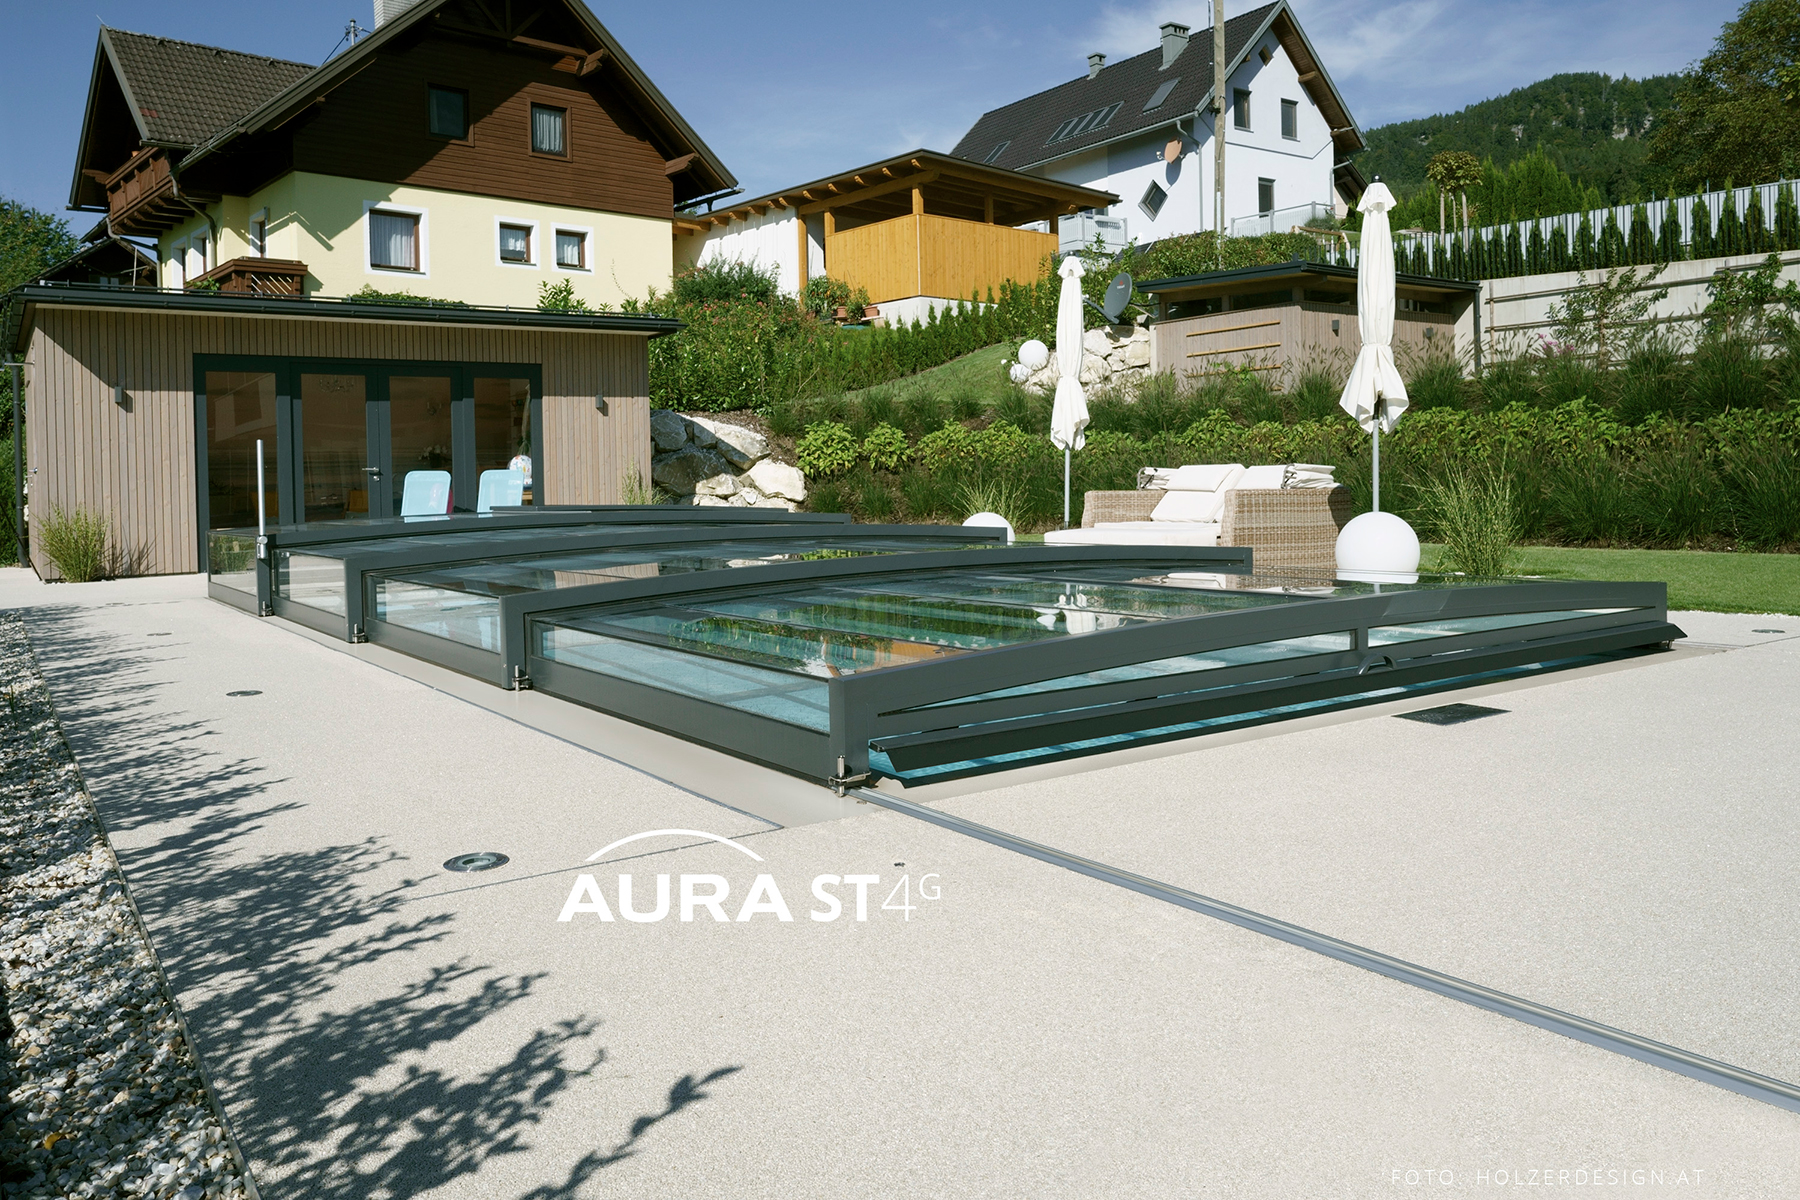 Aura-ST4G-2021-103